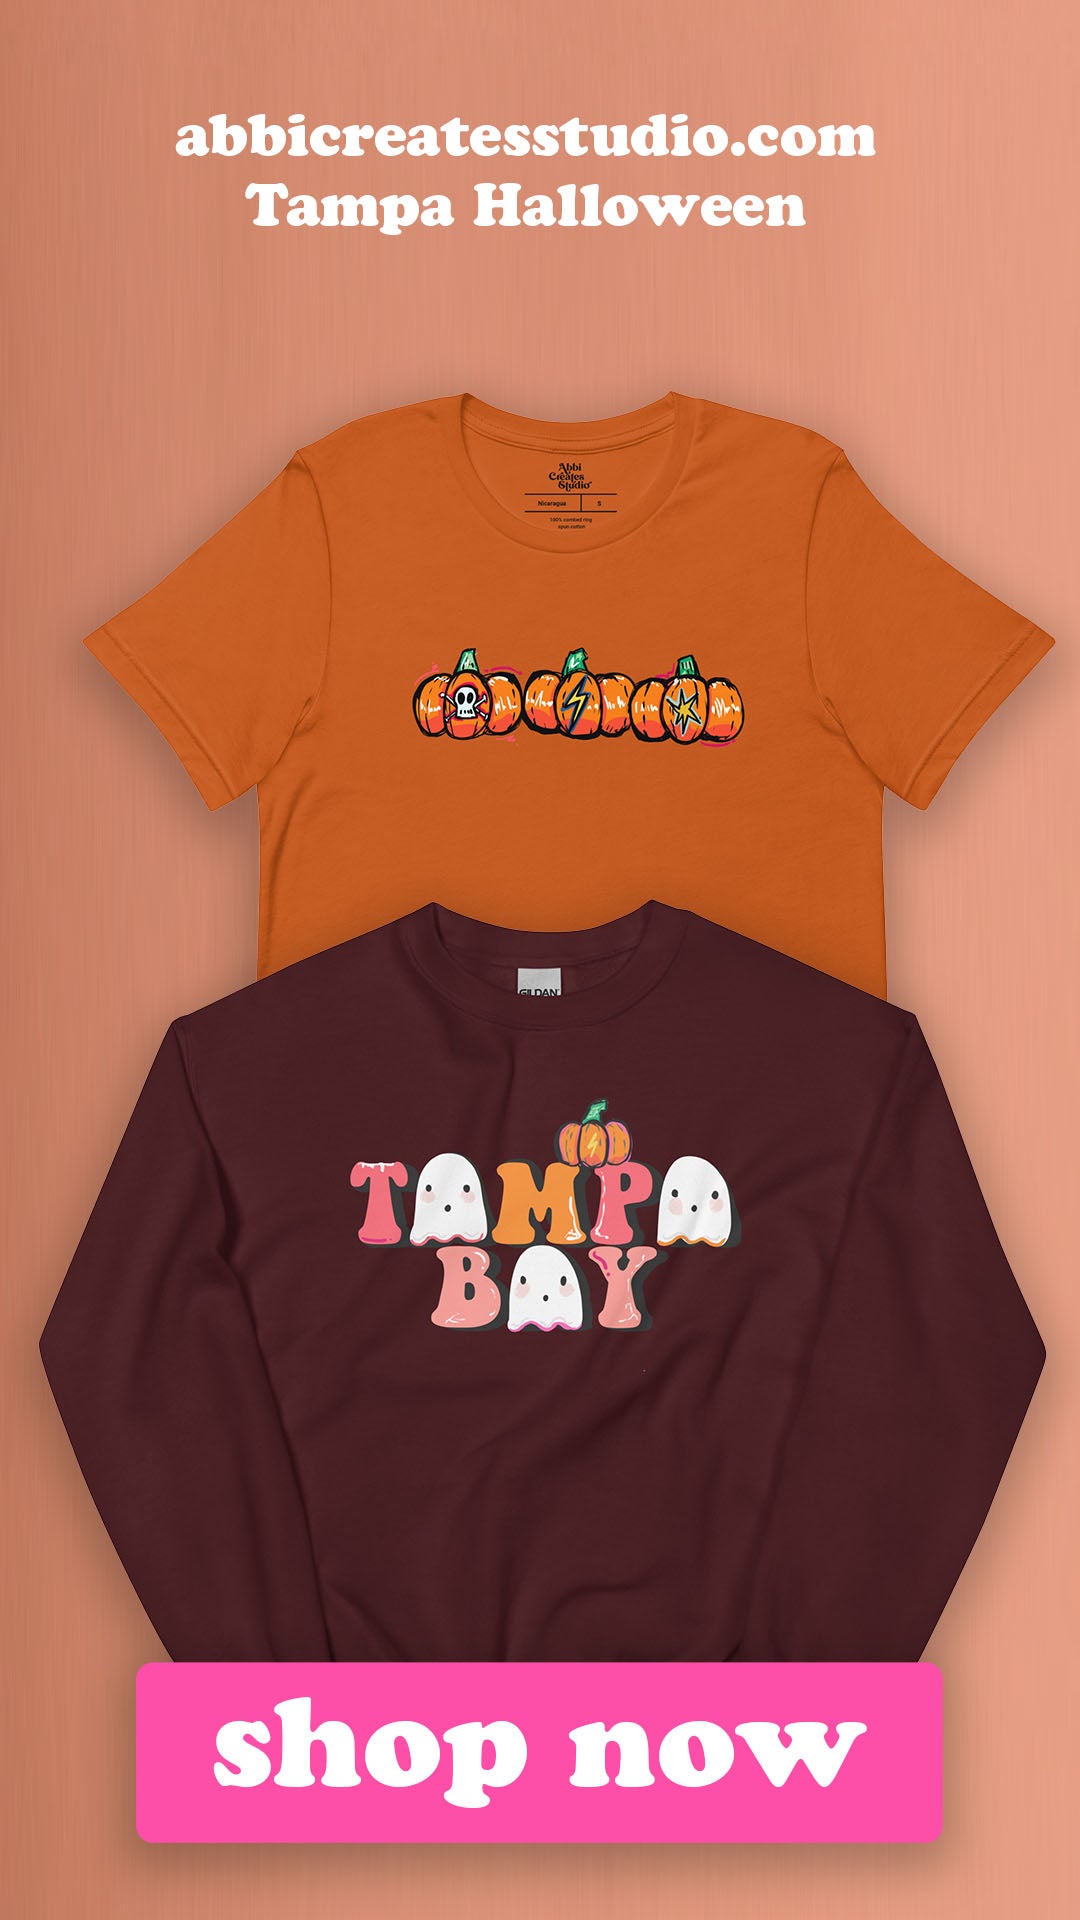 Tampa Halloween Graphic Tee | Abbicreates studio | Illustrated graphic t shirt designs 